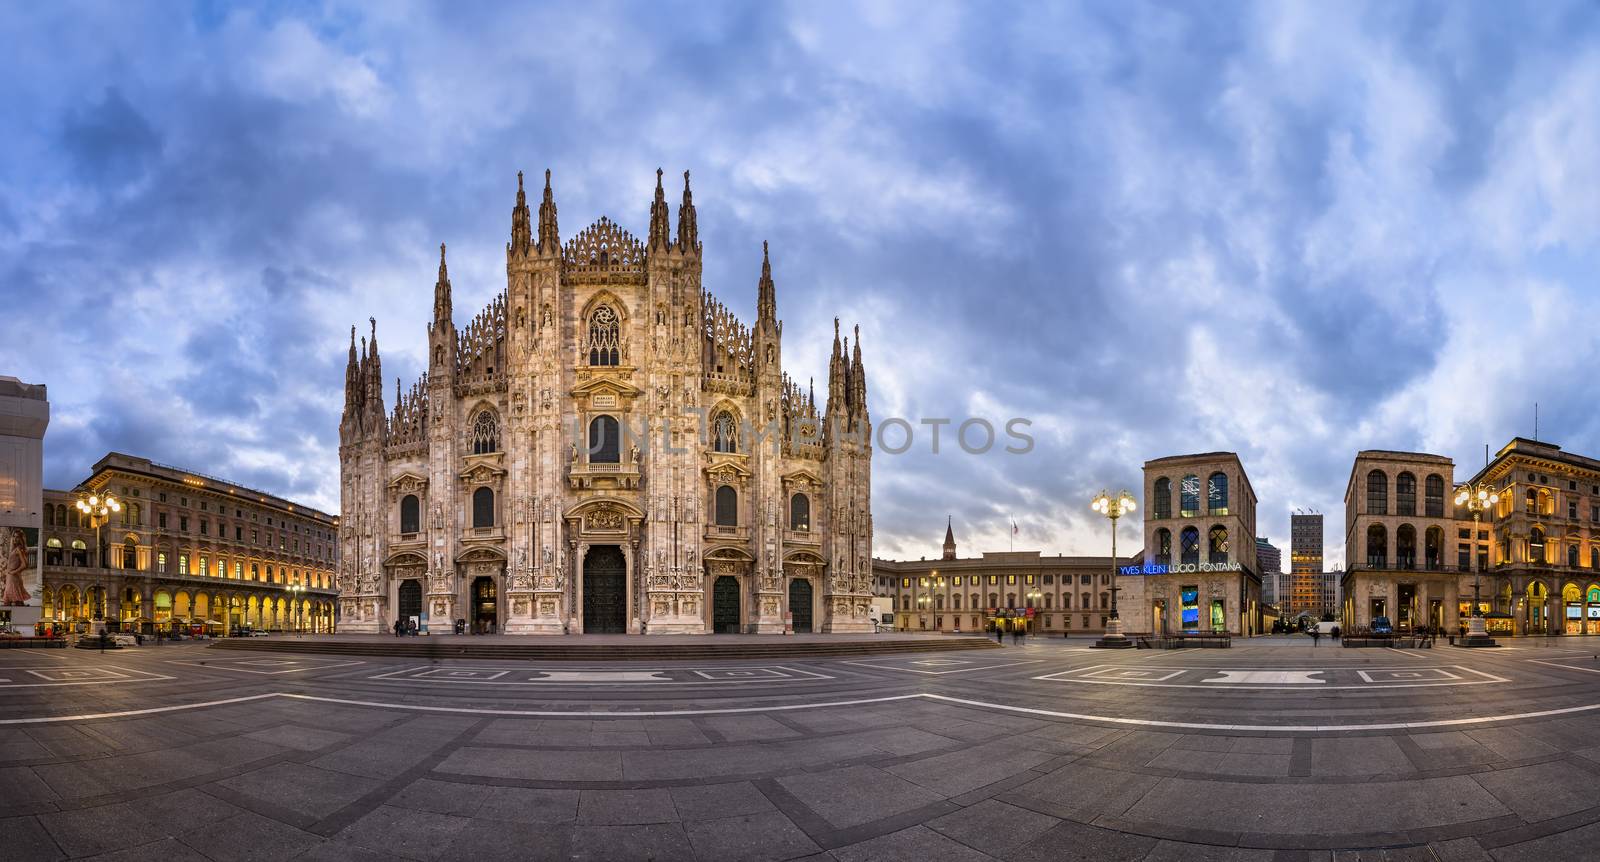 Panorama of Duomo di Milano (Milan Cathedral) and Piazza del Duo by anshar